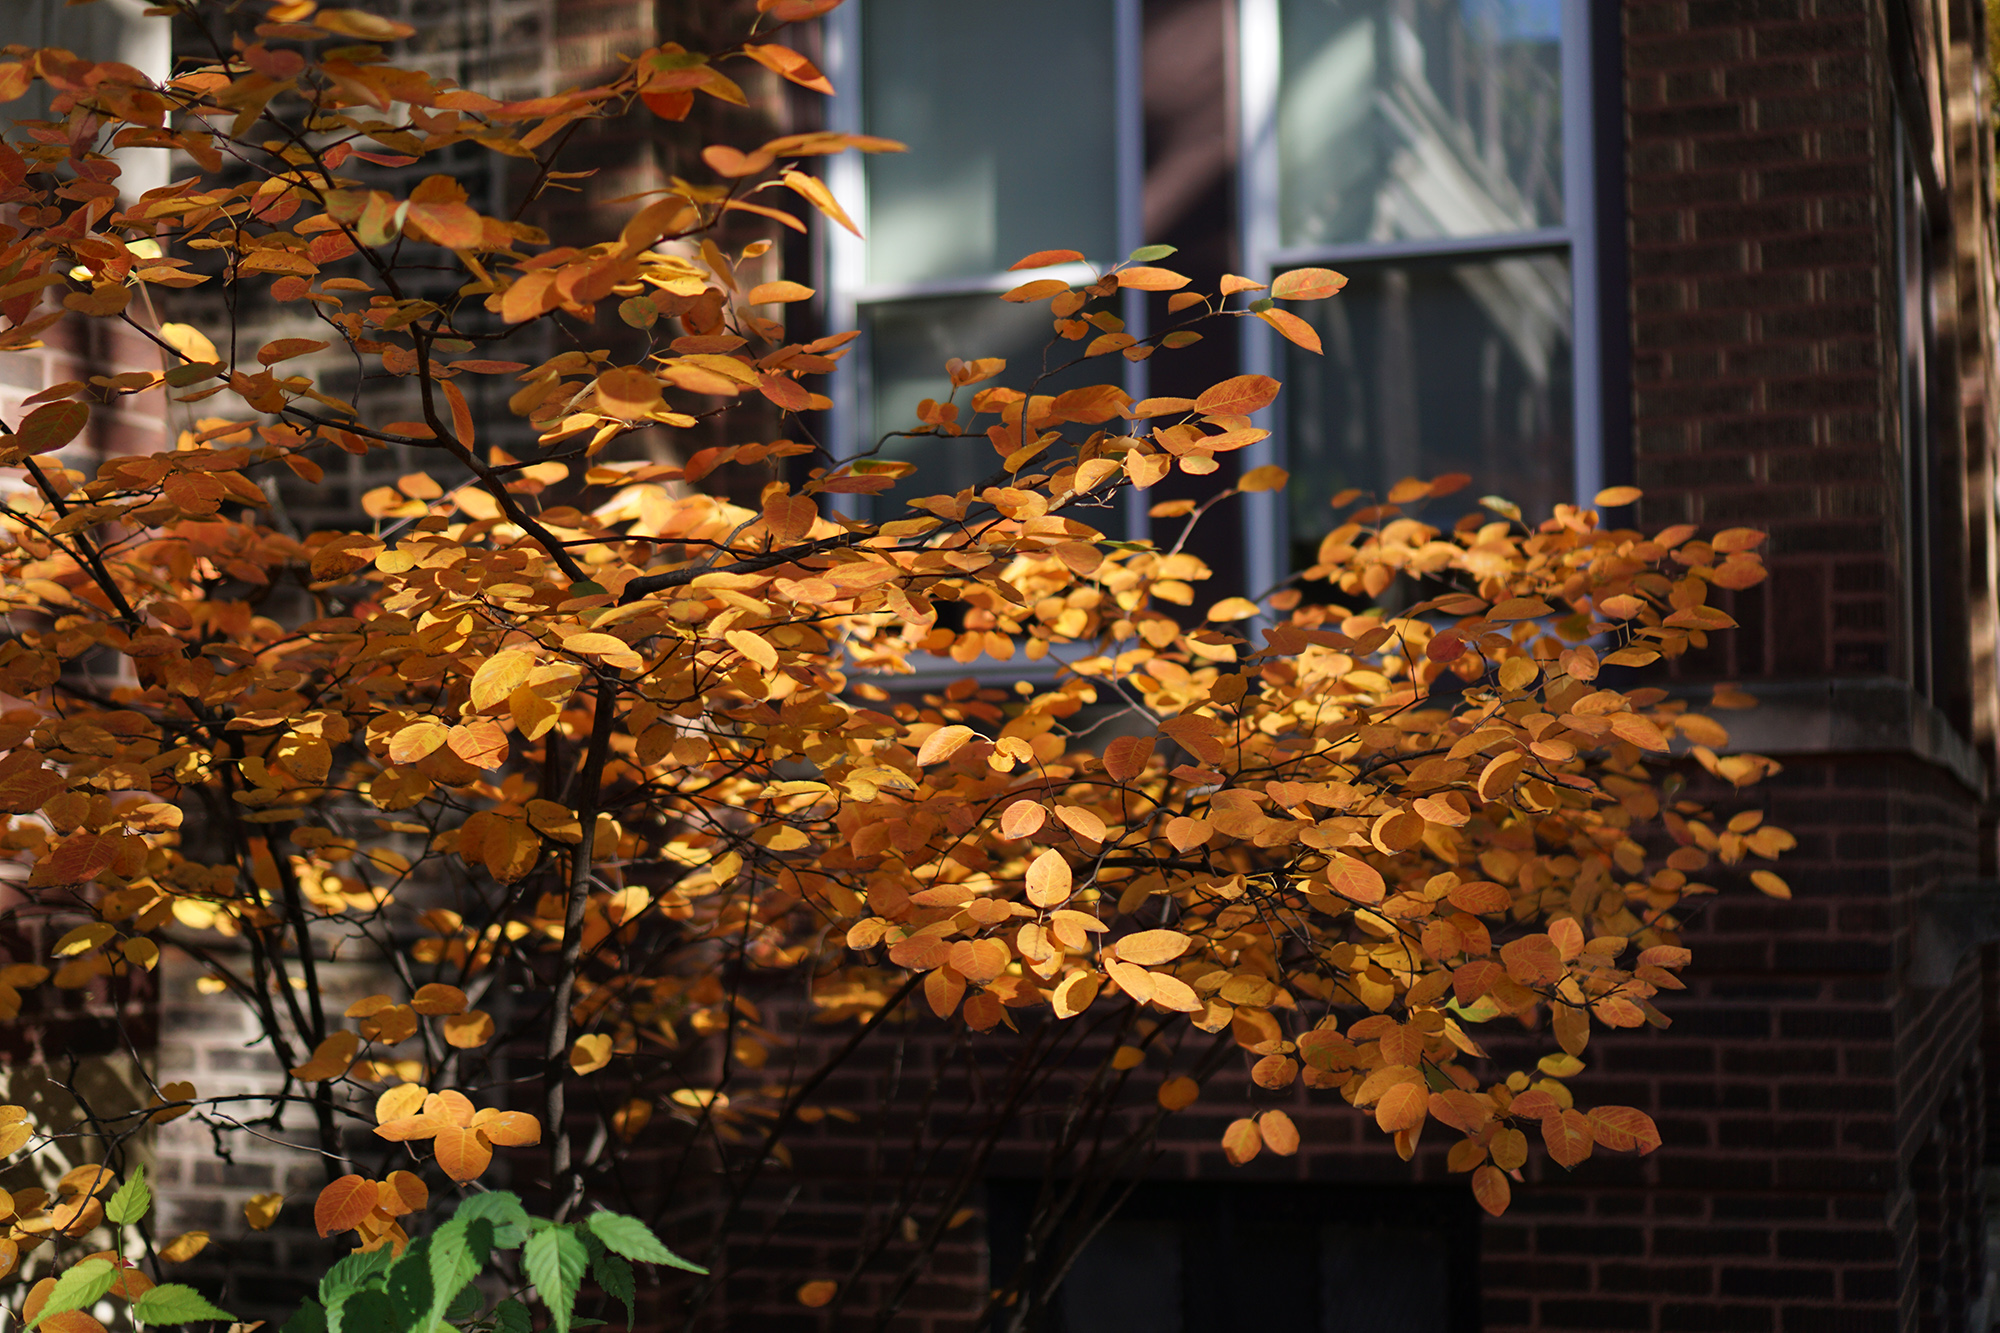 Serviceberry tree in autumn, Chicago IL / Darker than Green